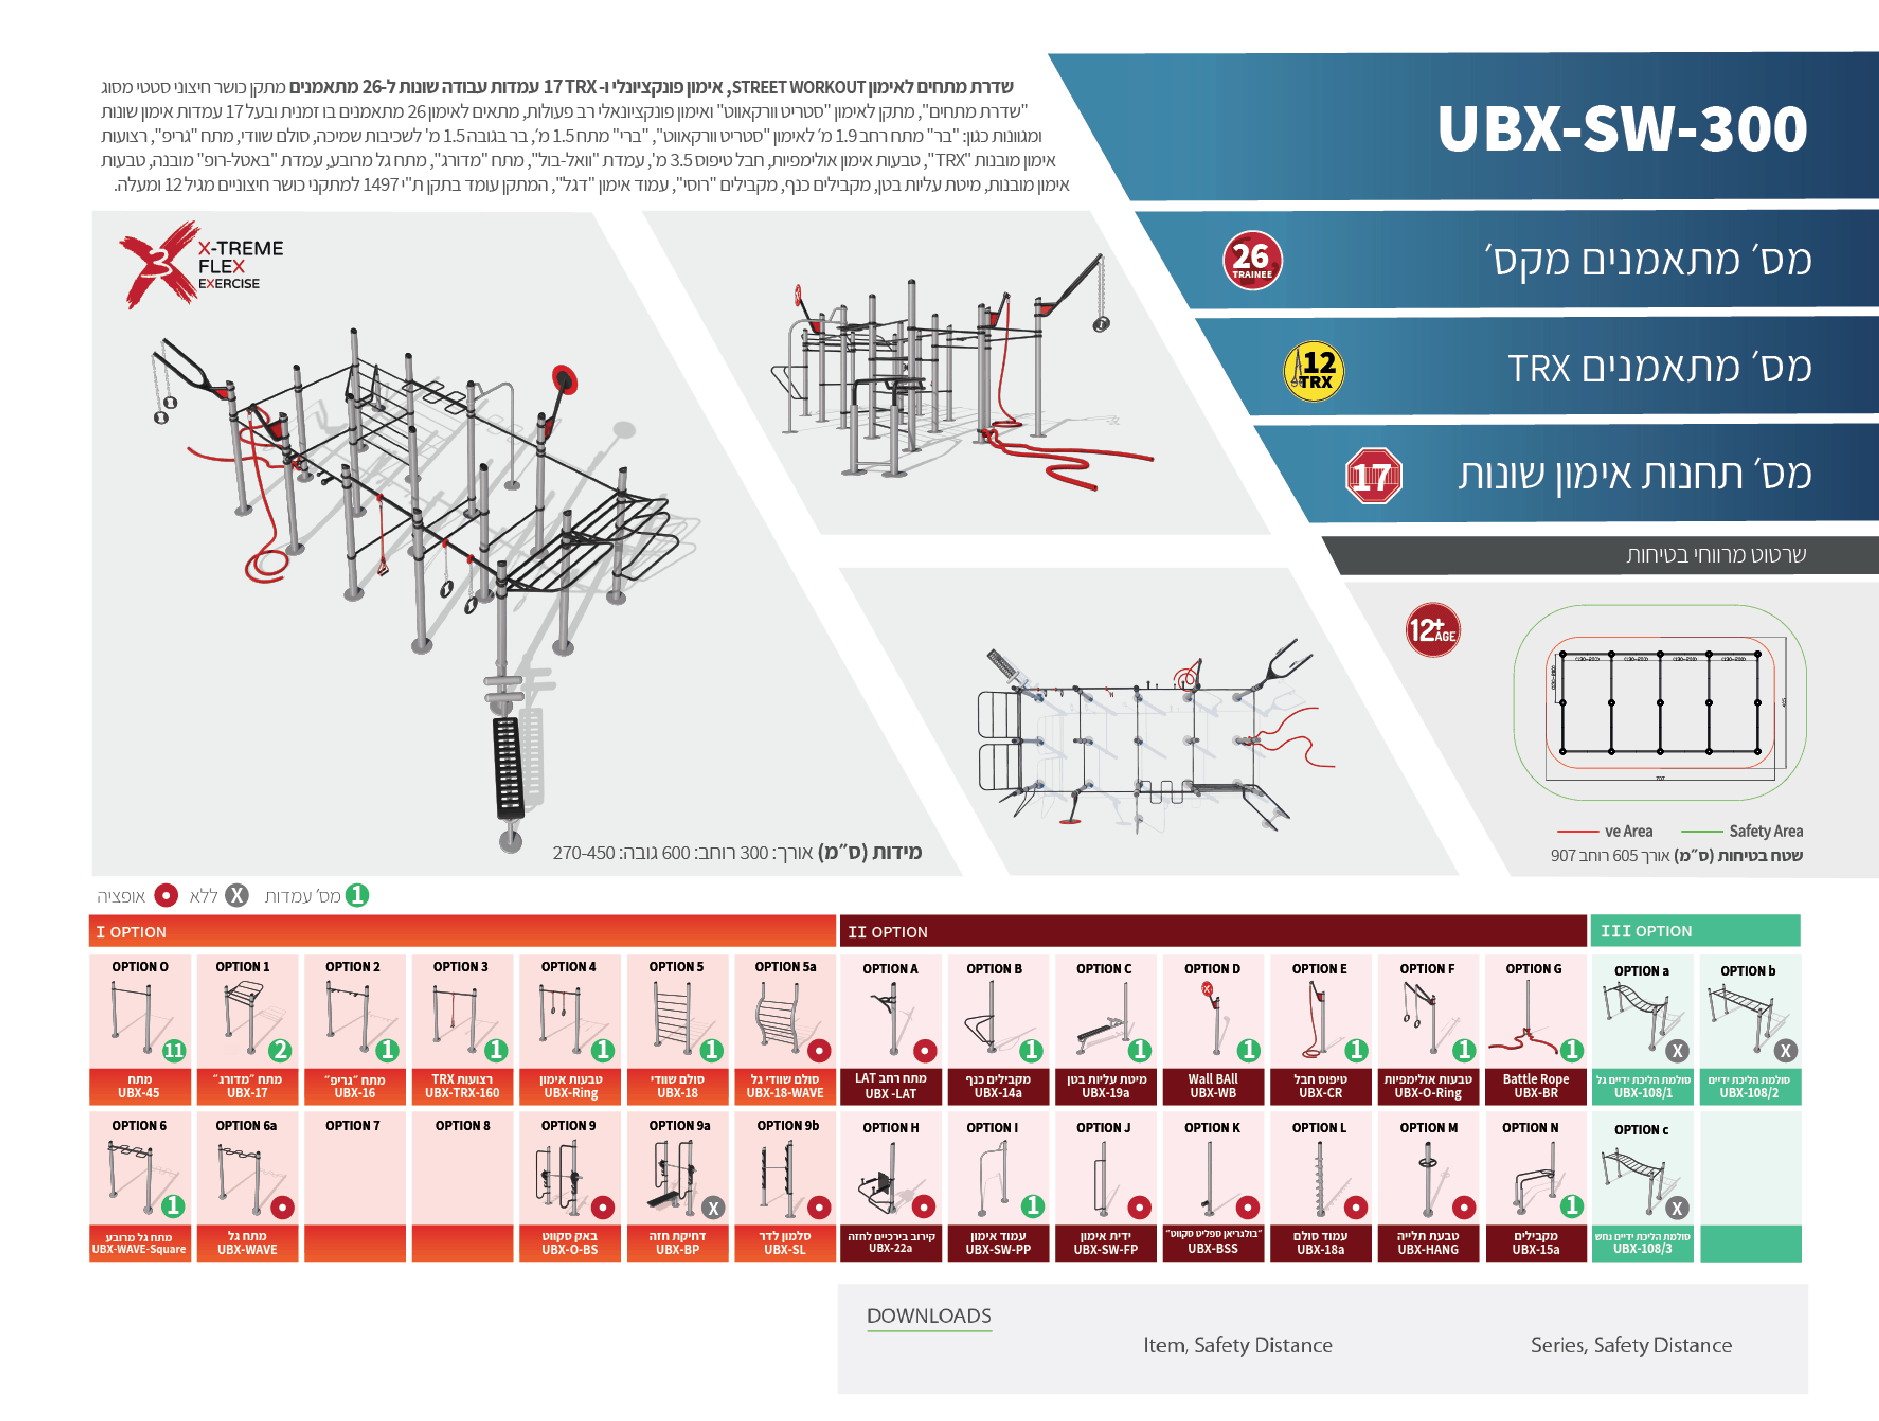 ubx-sw-300 אורבניקס - מתקן כושר